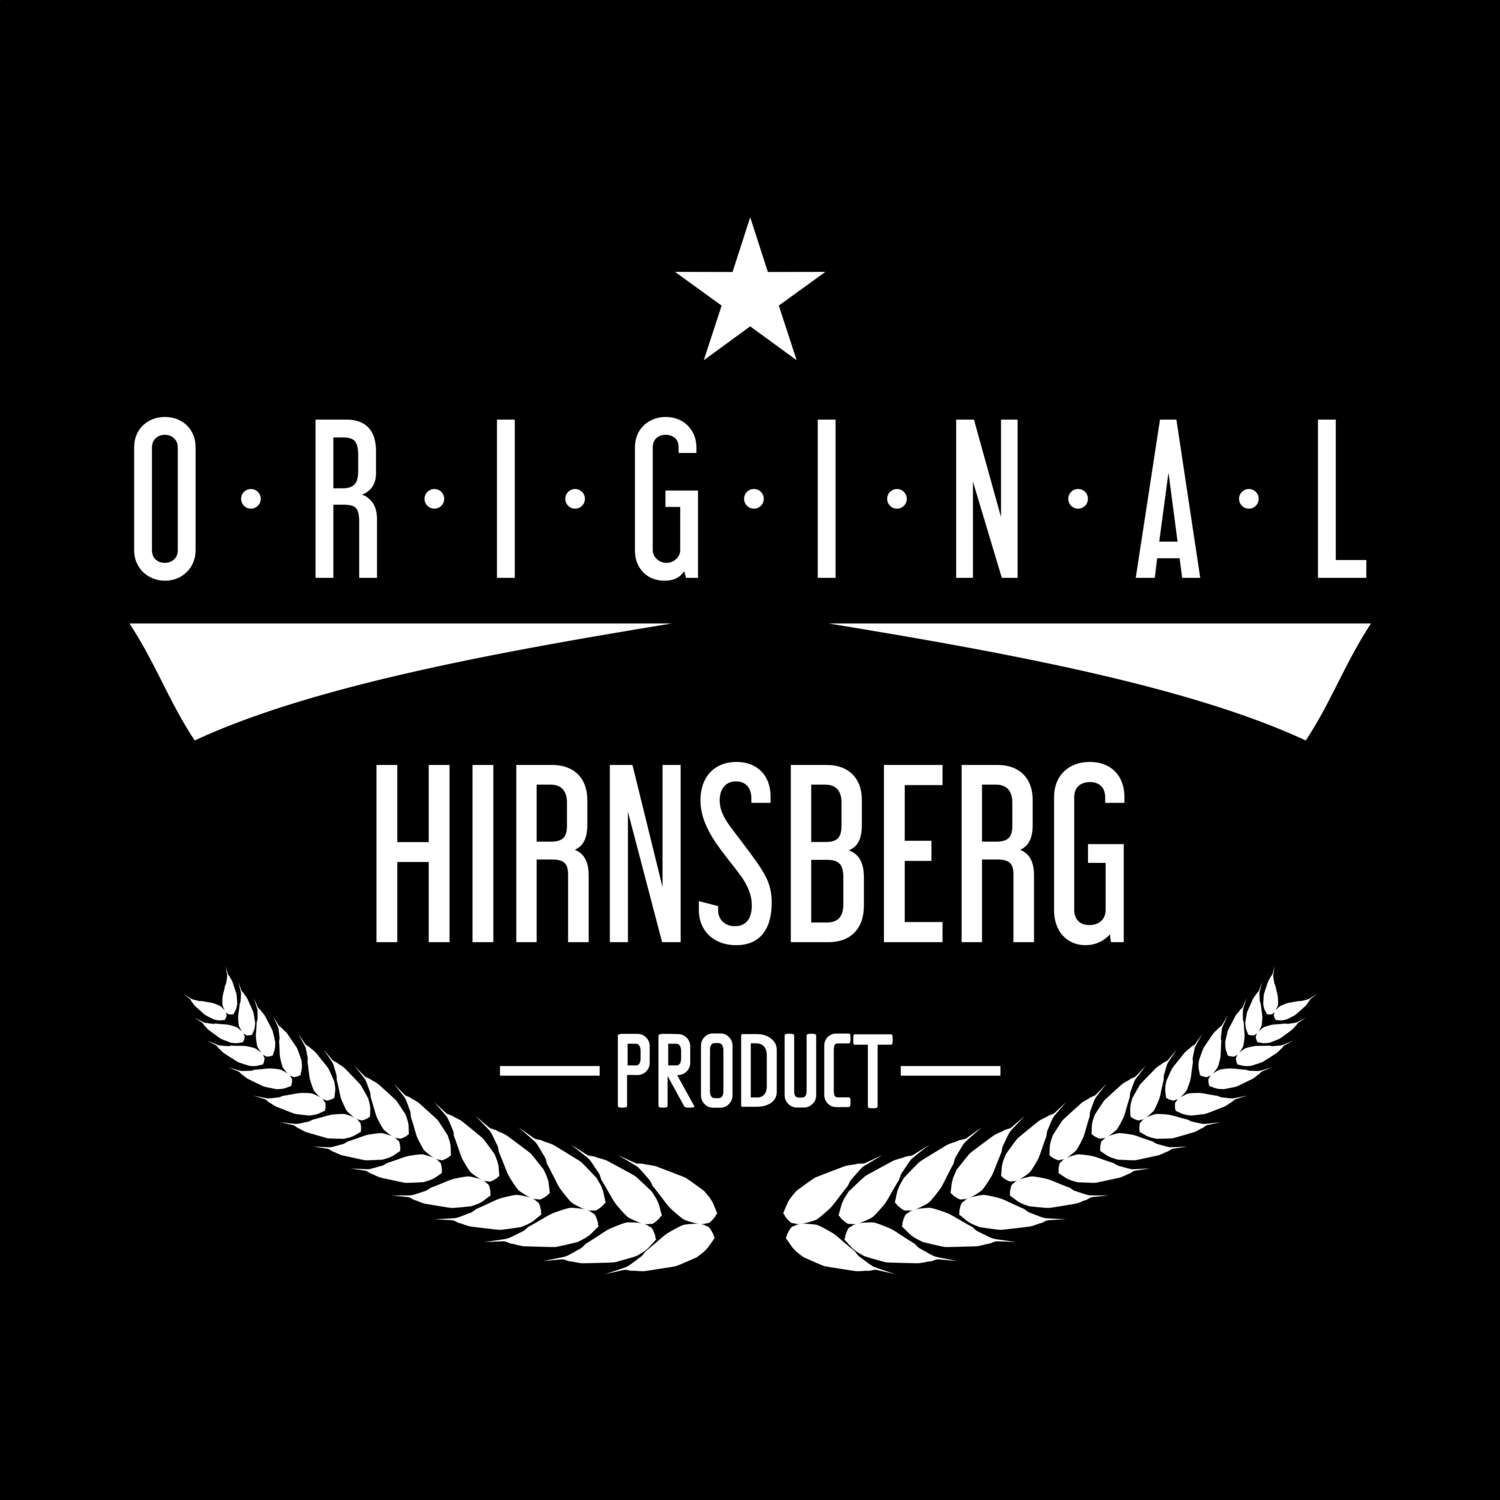 Hirnsberg T-Shirt »Original Product«